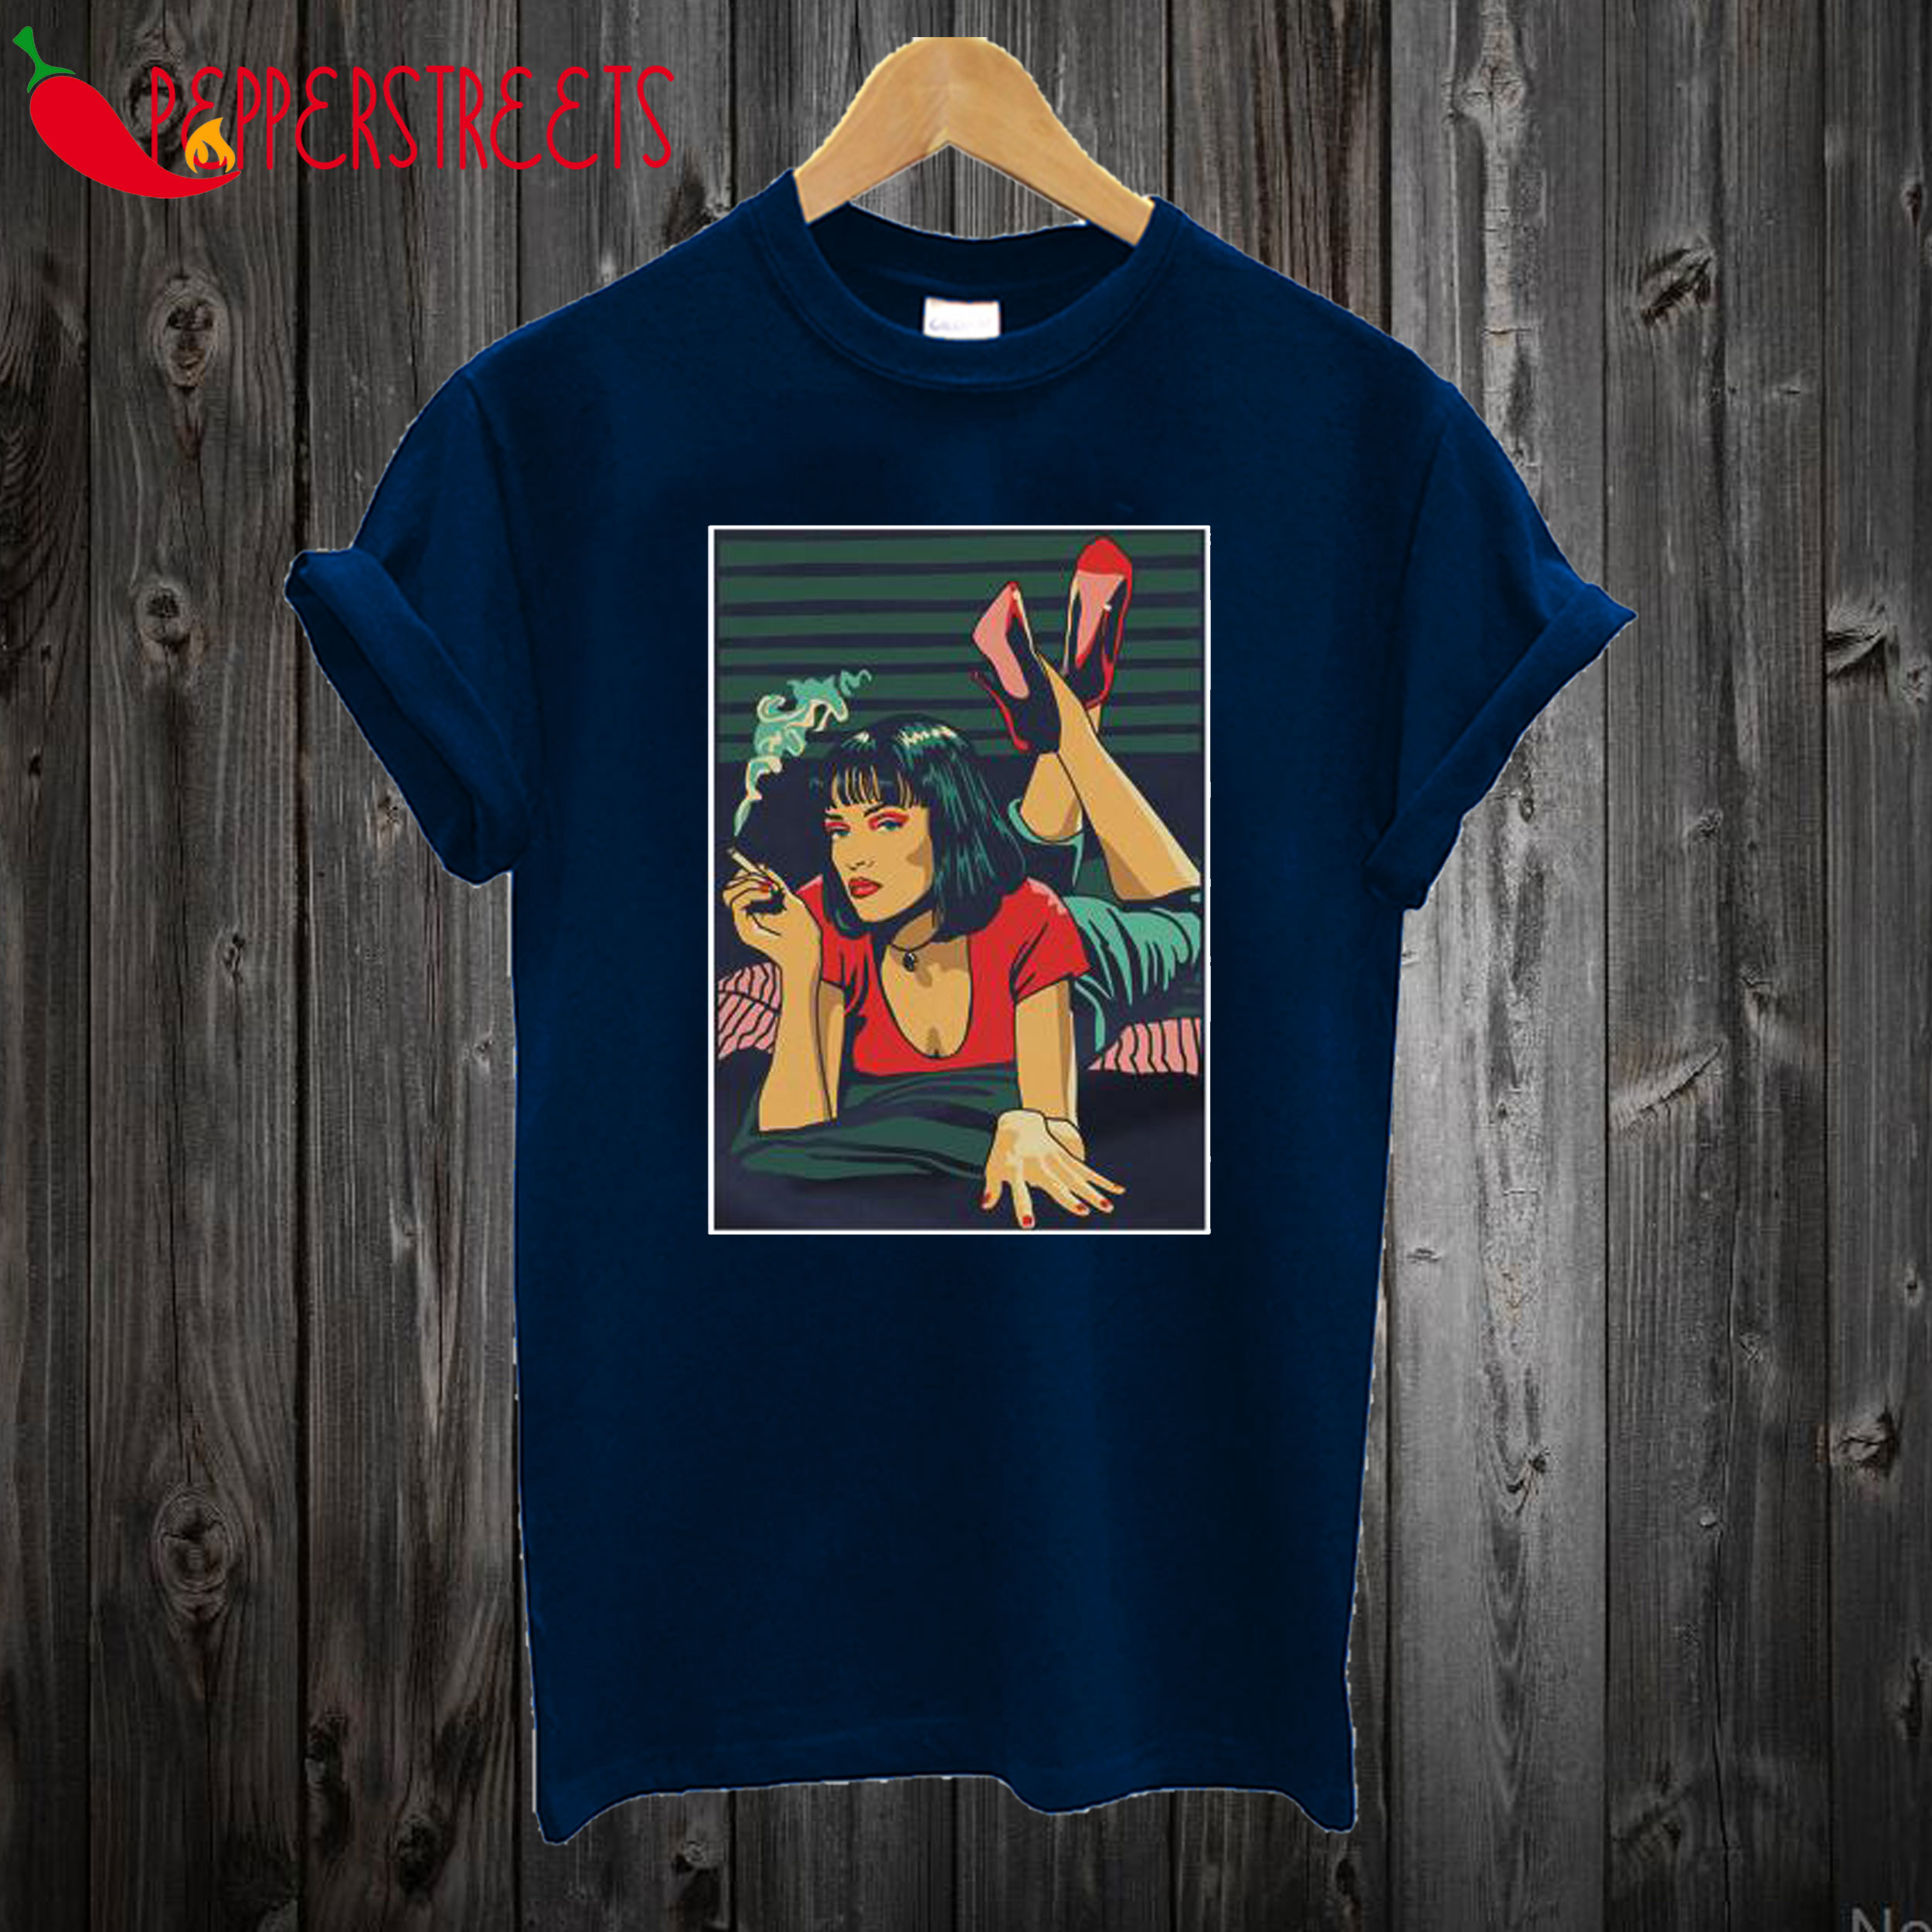 Maria Pulp Fiction T Shirt